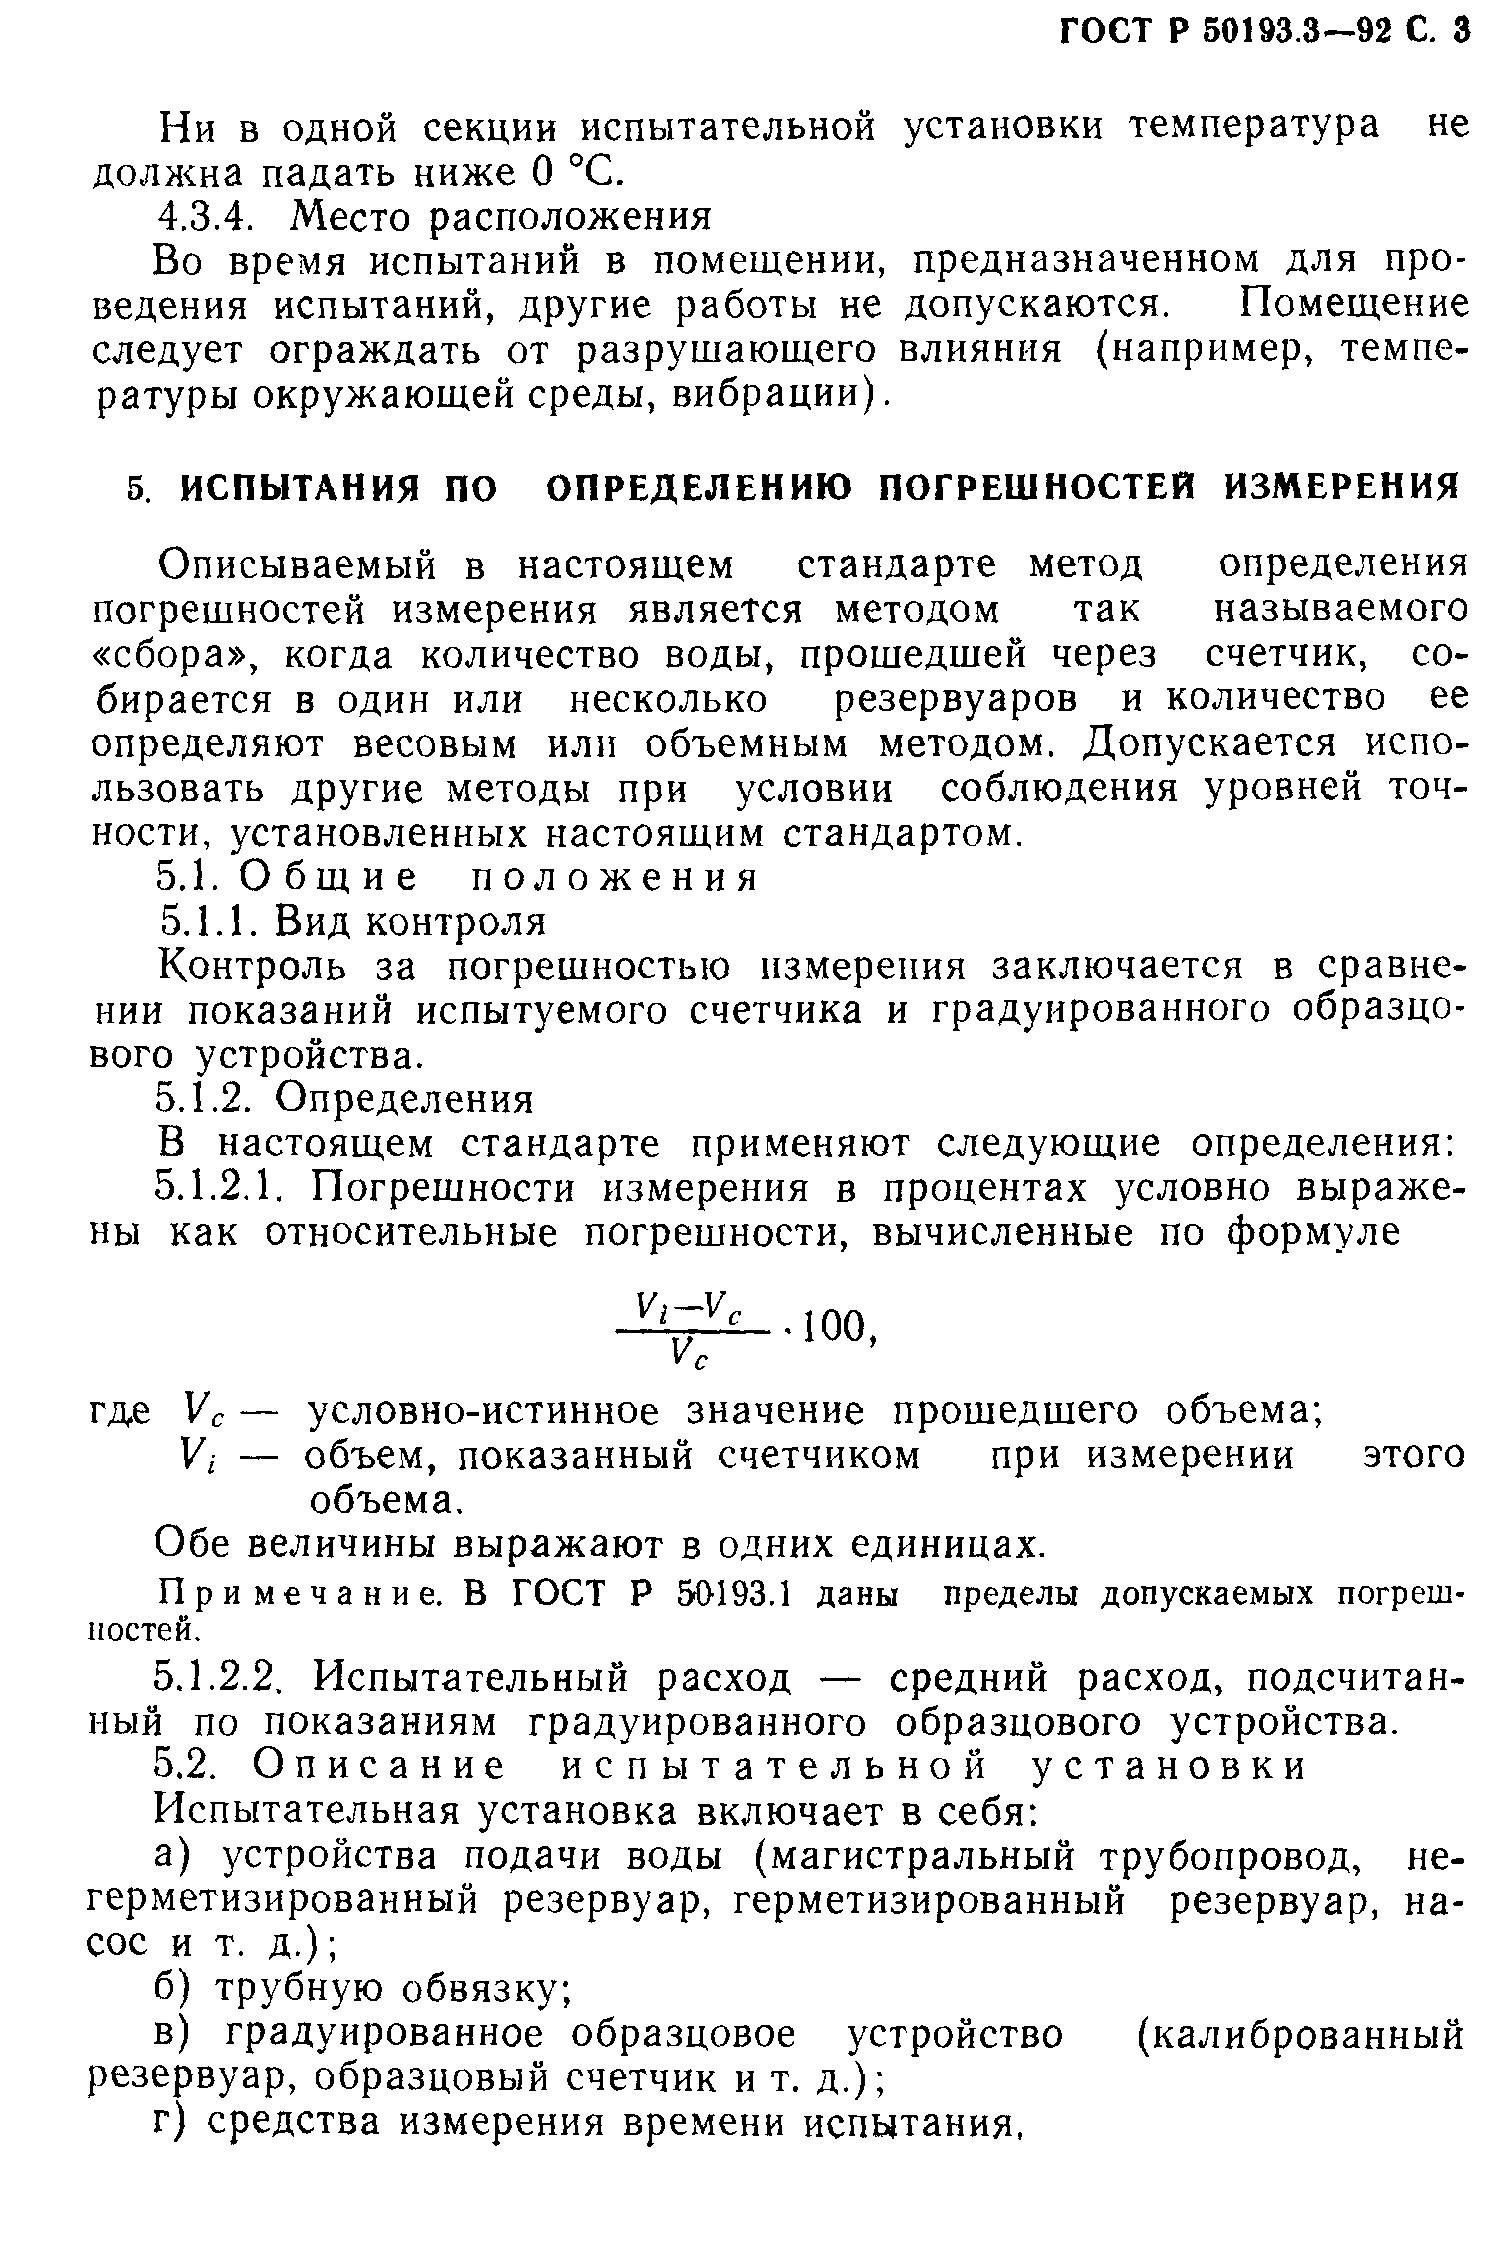 ГОСТ Р 50193.3-92